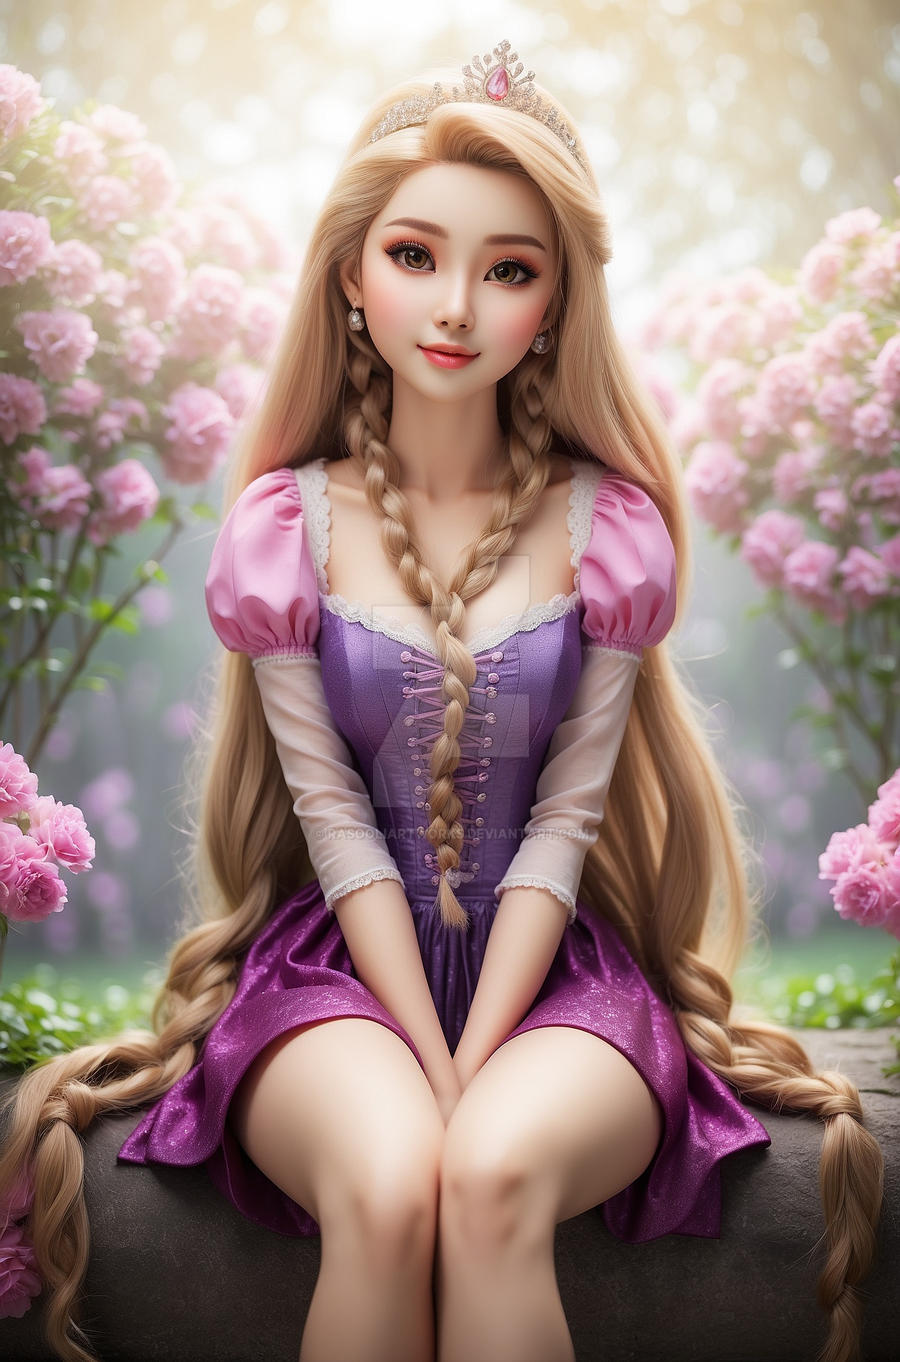 Princess Rapunzel from Disney (Tangled) by RasooliArtworks on DeviantArt